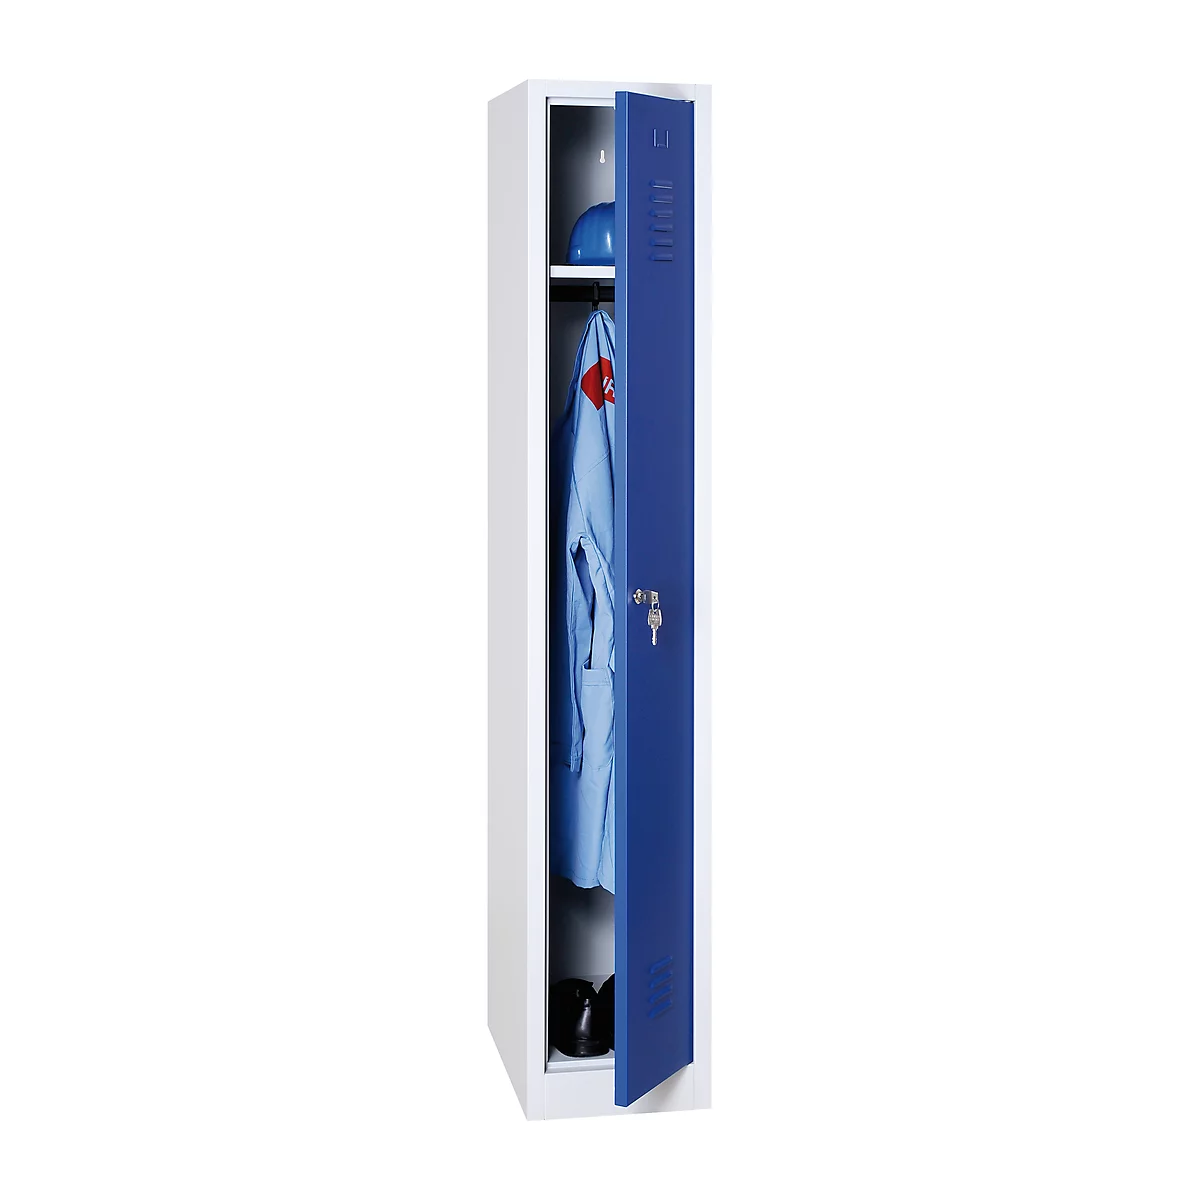 Taquilla, 1 compartimento, ancho 300 x alto 1800 mm, gris claro/azul genciana RAL 7035/5010, cerradura de cilindro, azul genciana